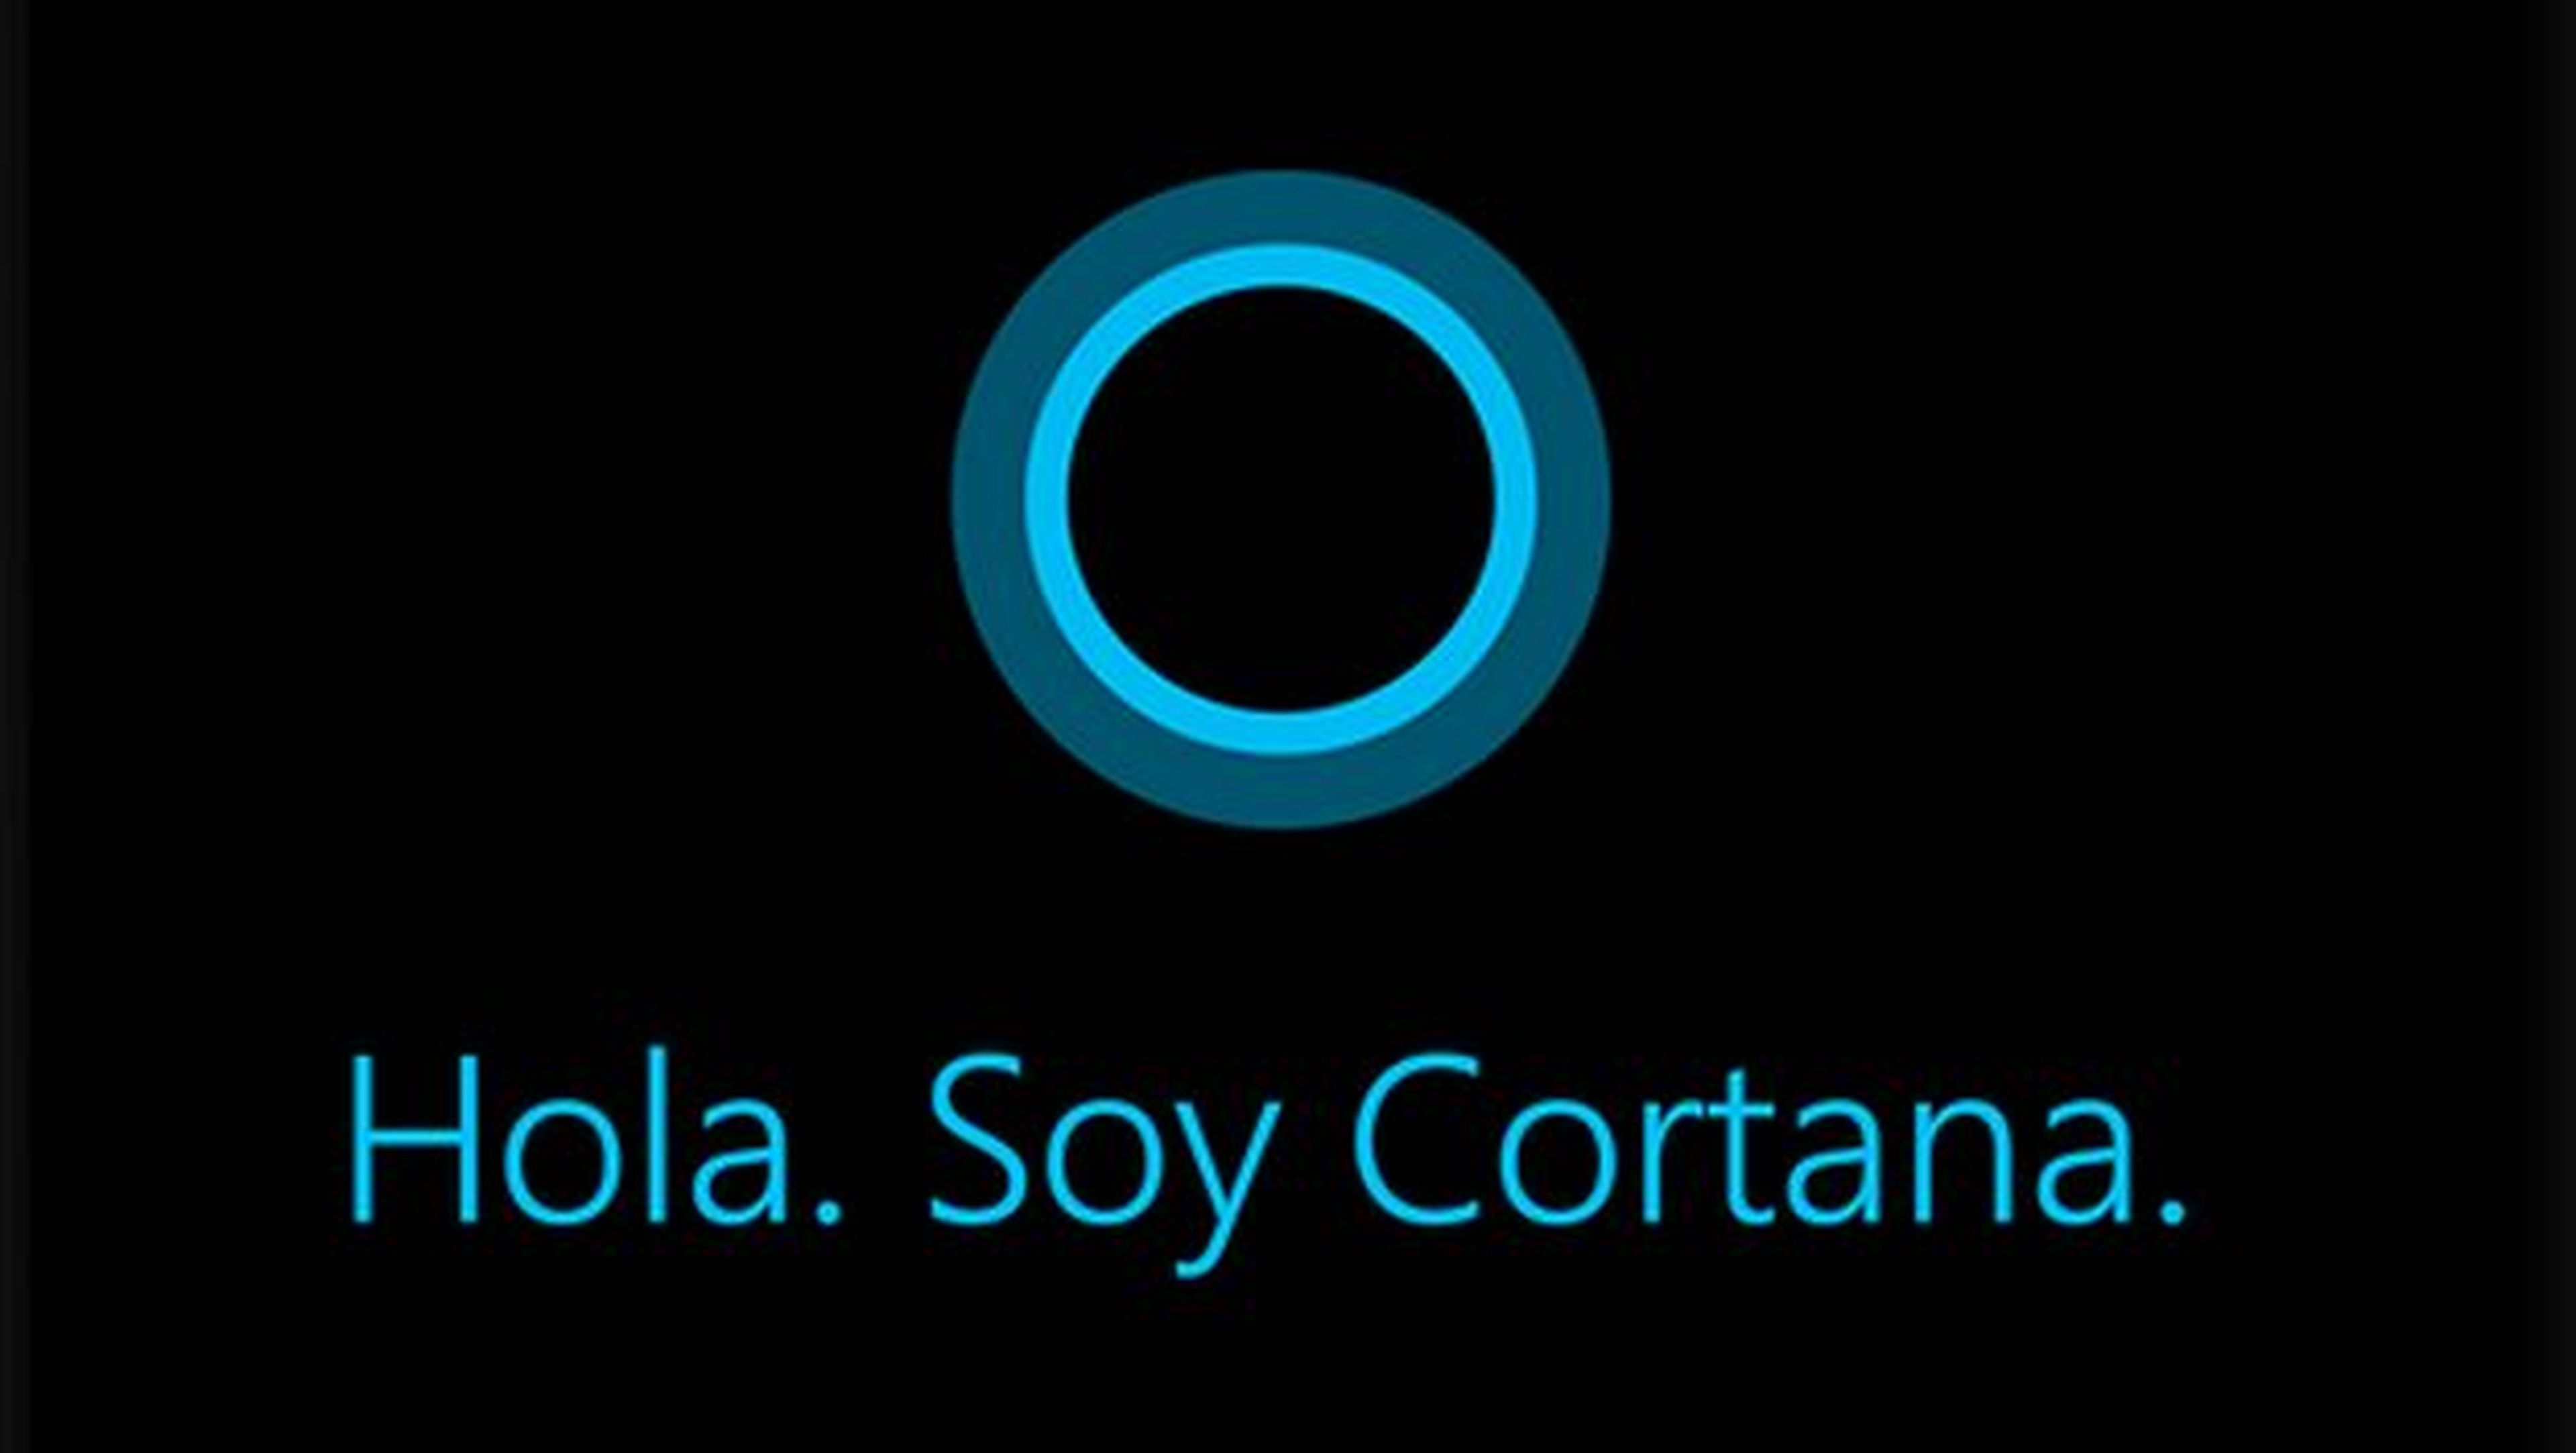 ¡Hola! Soy Cortana y acabo de llegar a España en Windows Phone 8.